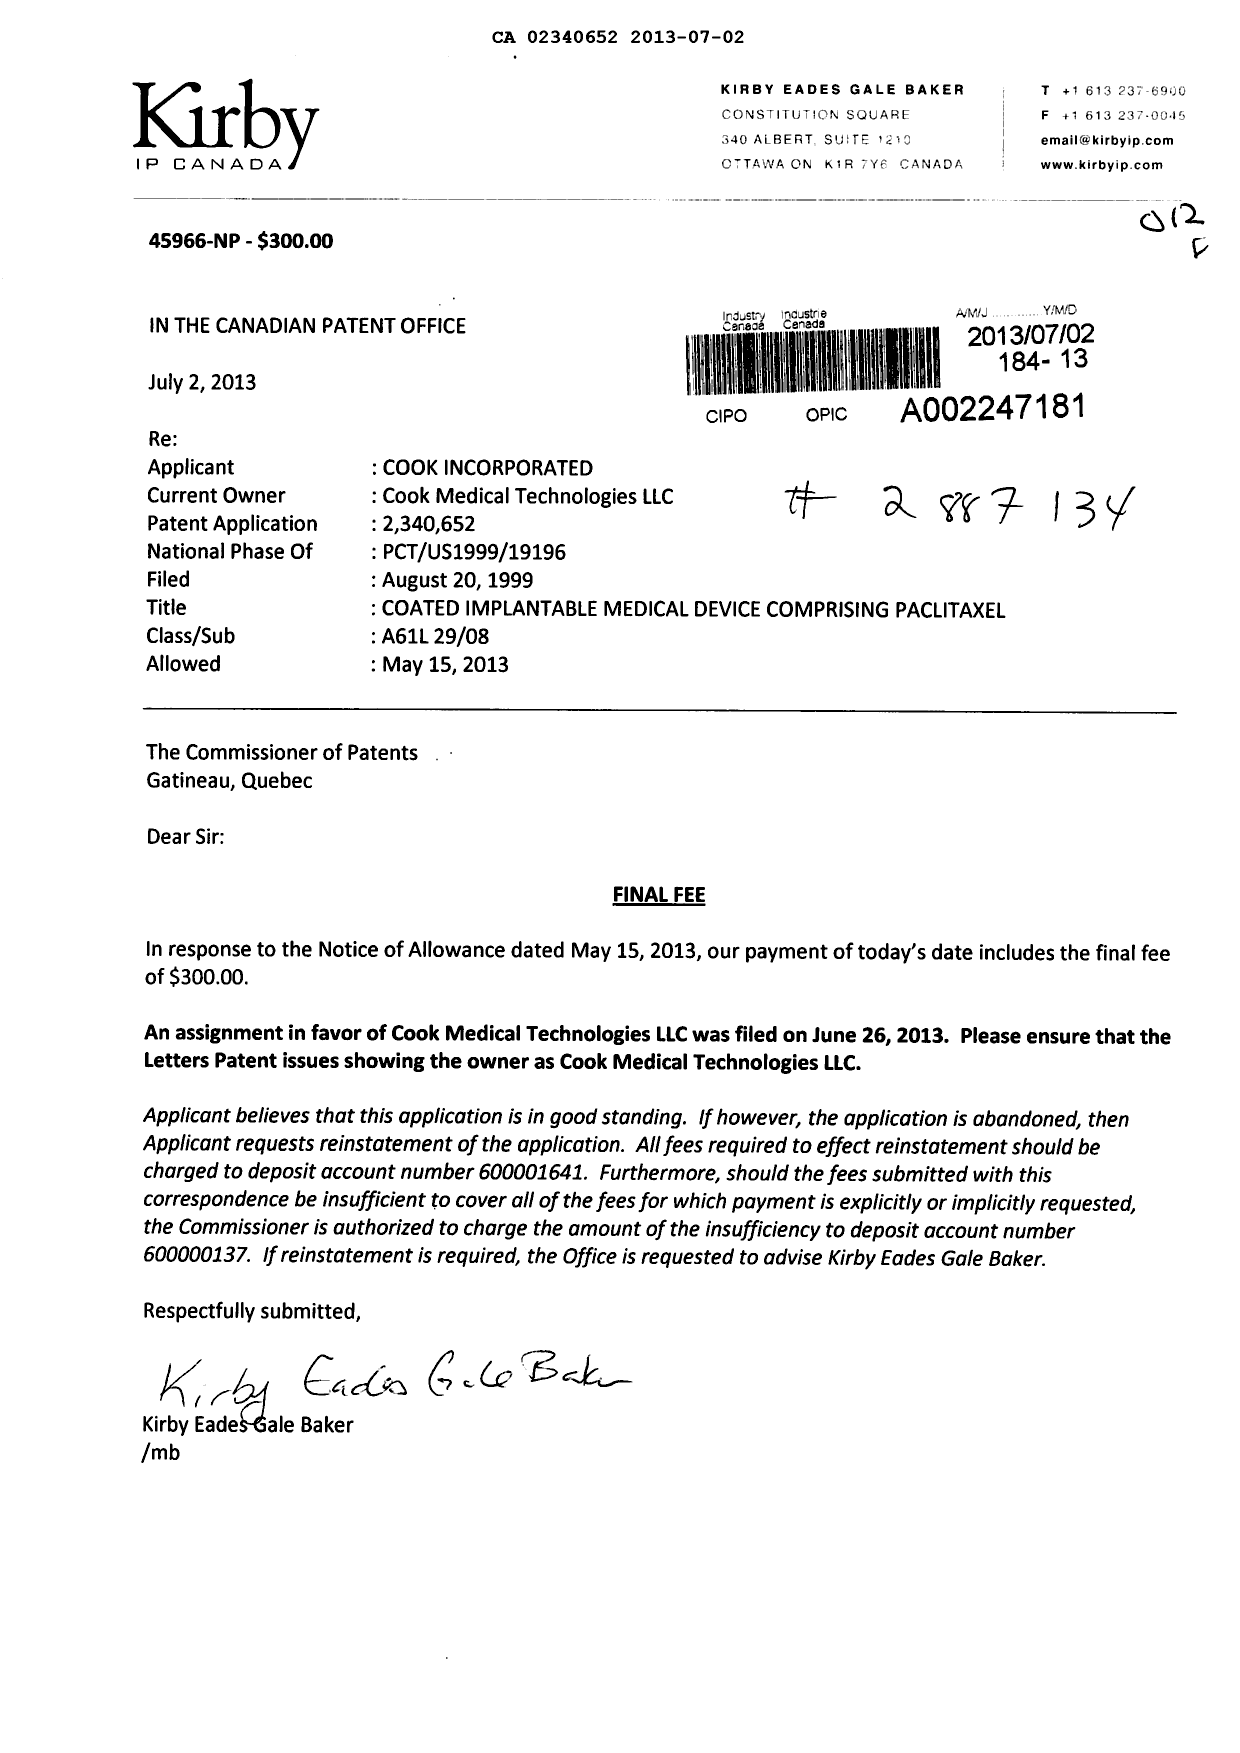 Canadian Patent Document 2340652. Correspondence 20130702. Image 1 of 1